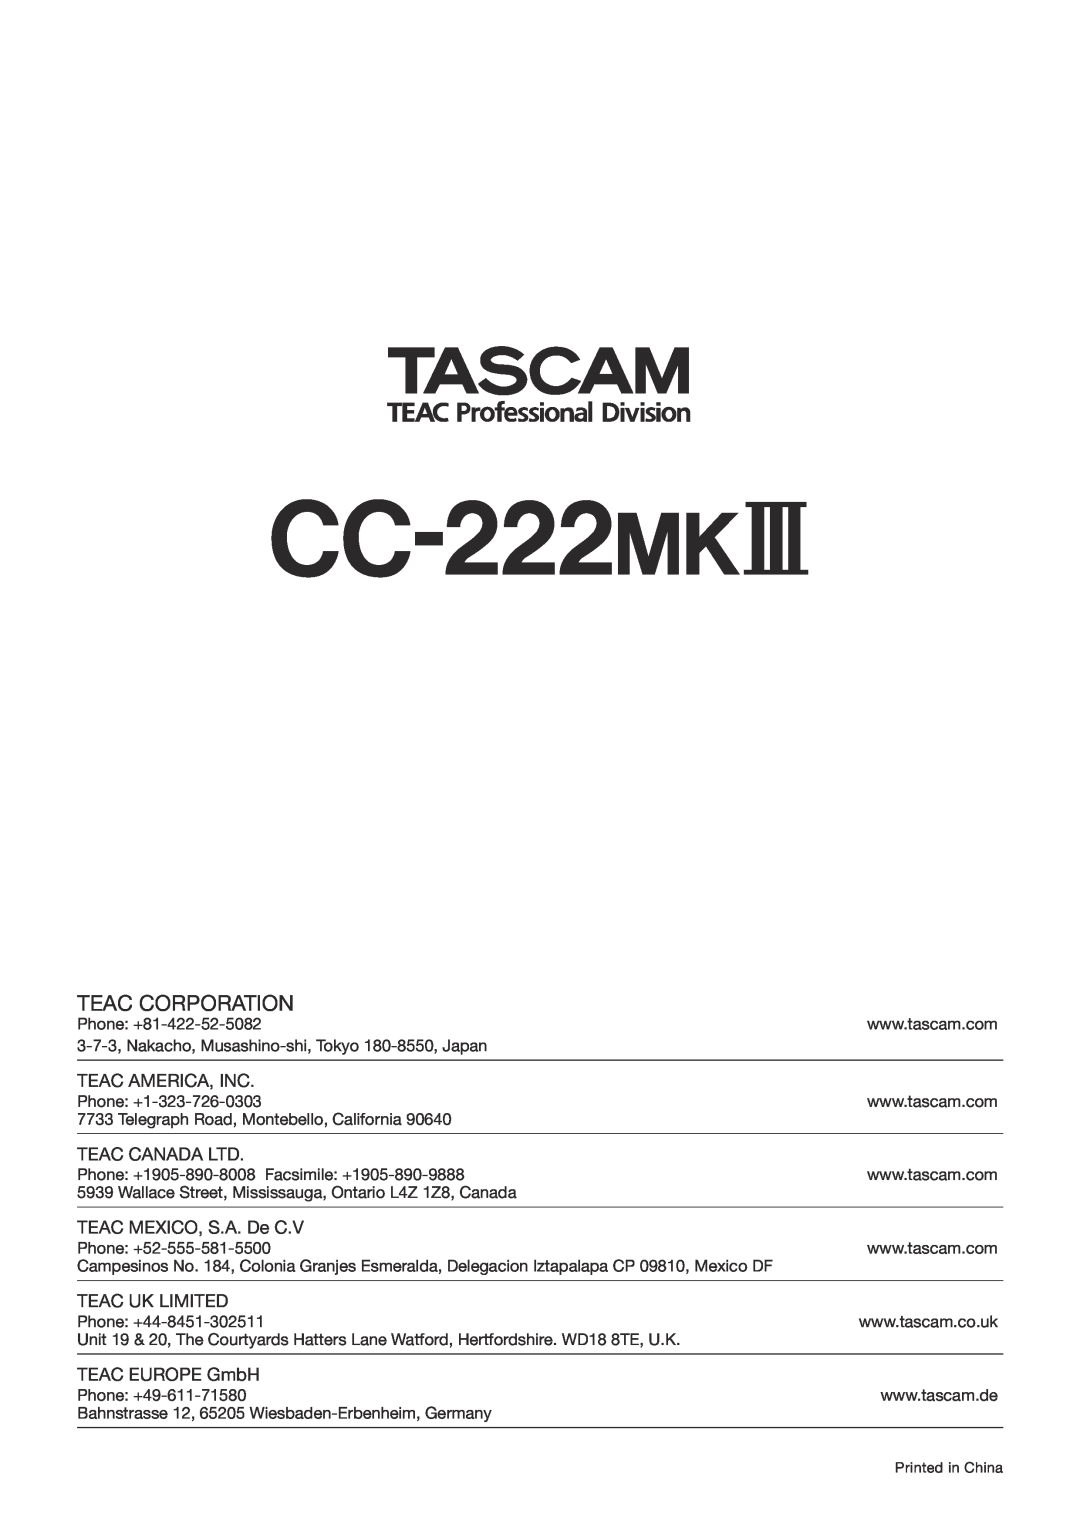 Tascam owner manual » CC-222MK$, Teac Corporation 